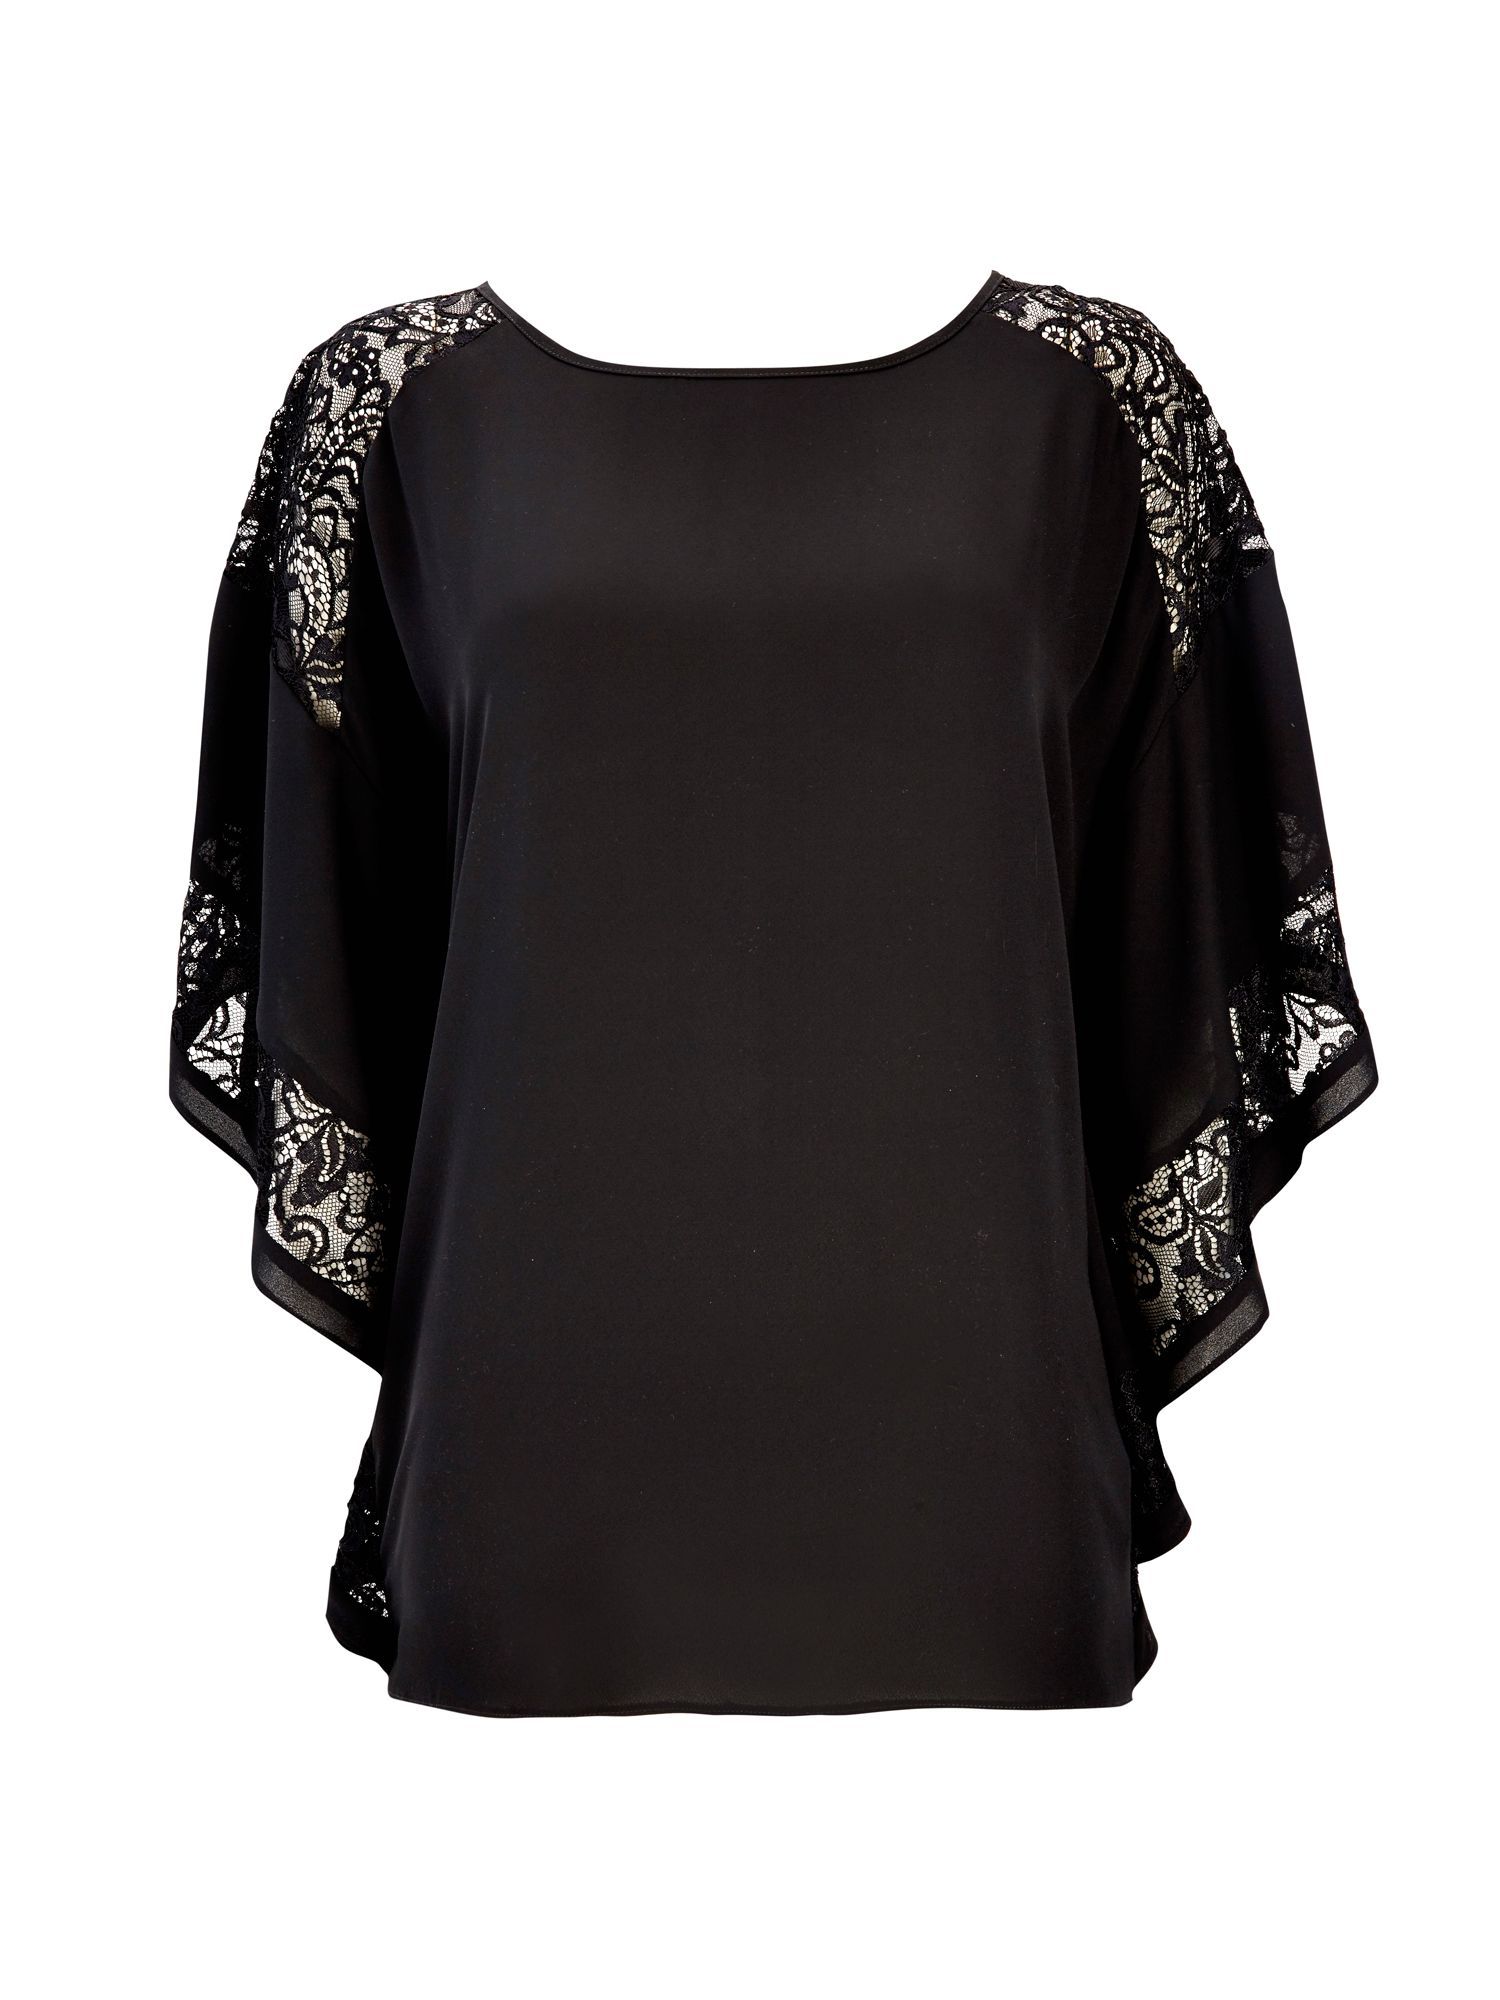 Wallis Black Crochet Kimono Top in Black | Lyst